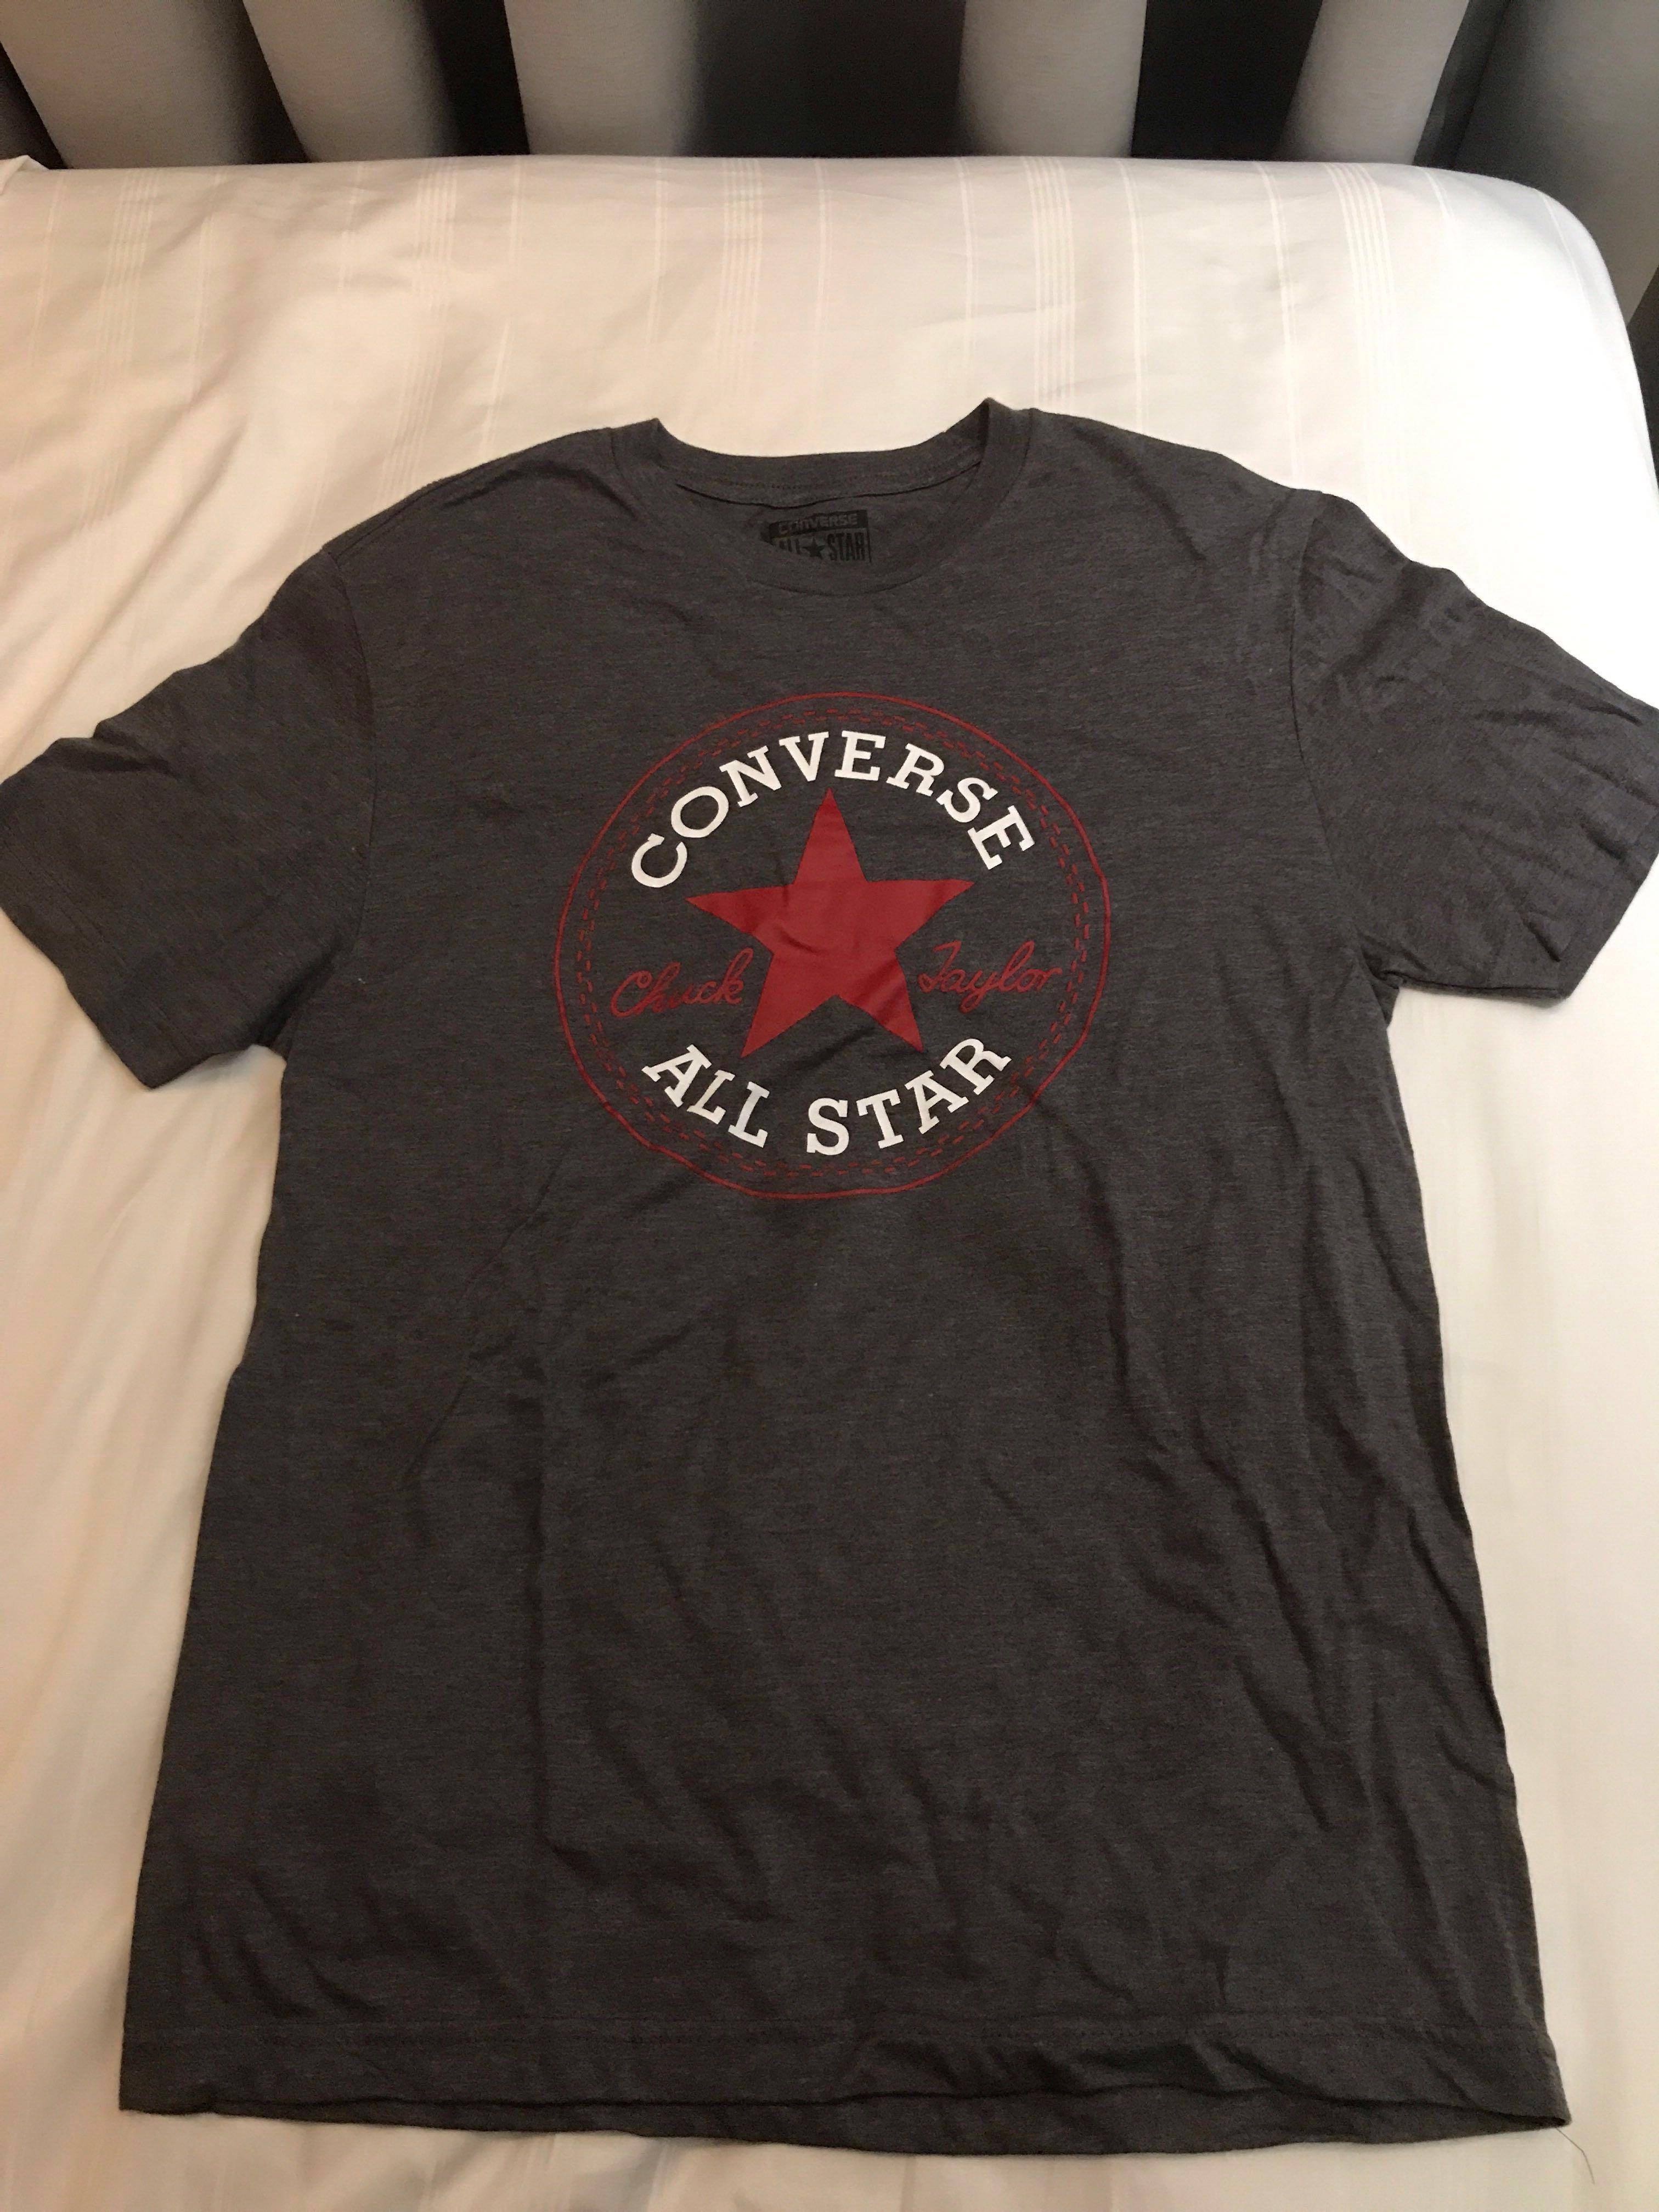 3 Converse All-Star T-Shirts, Men's 